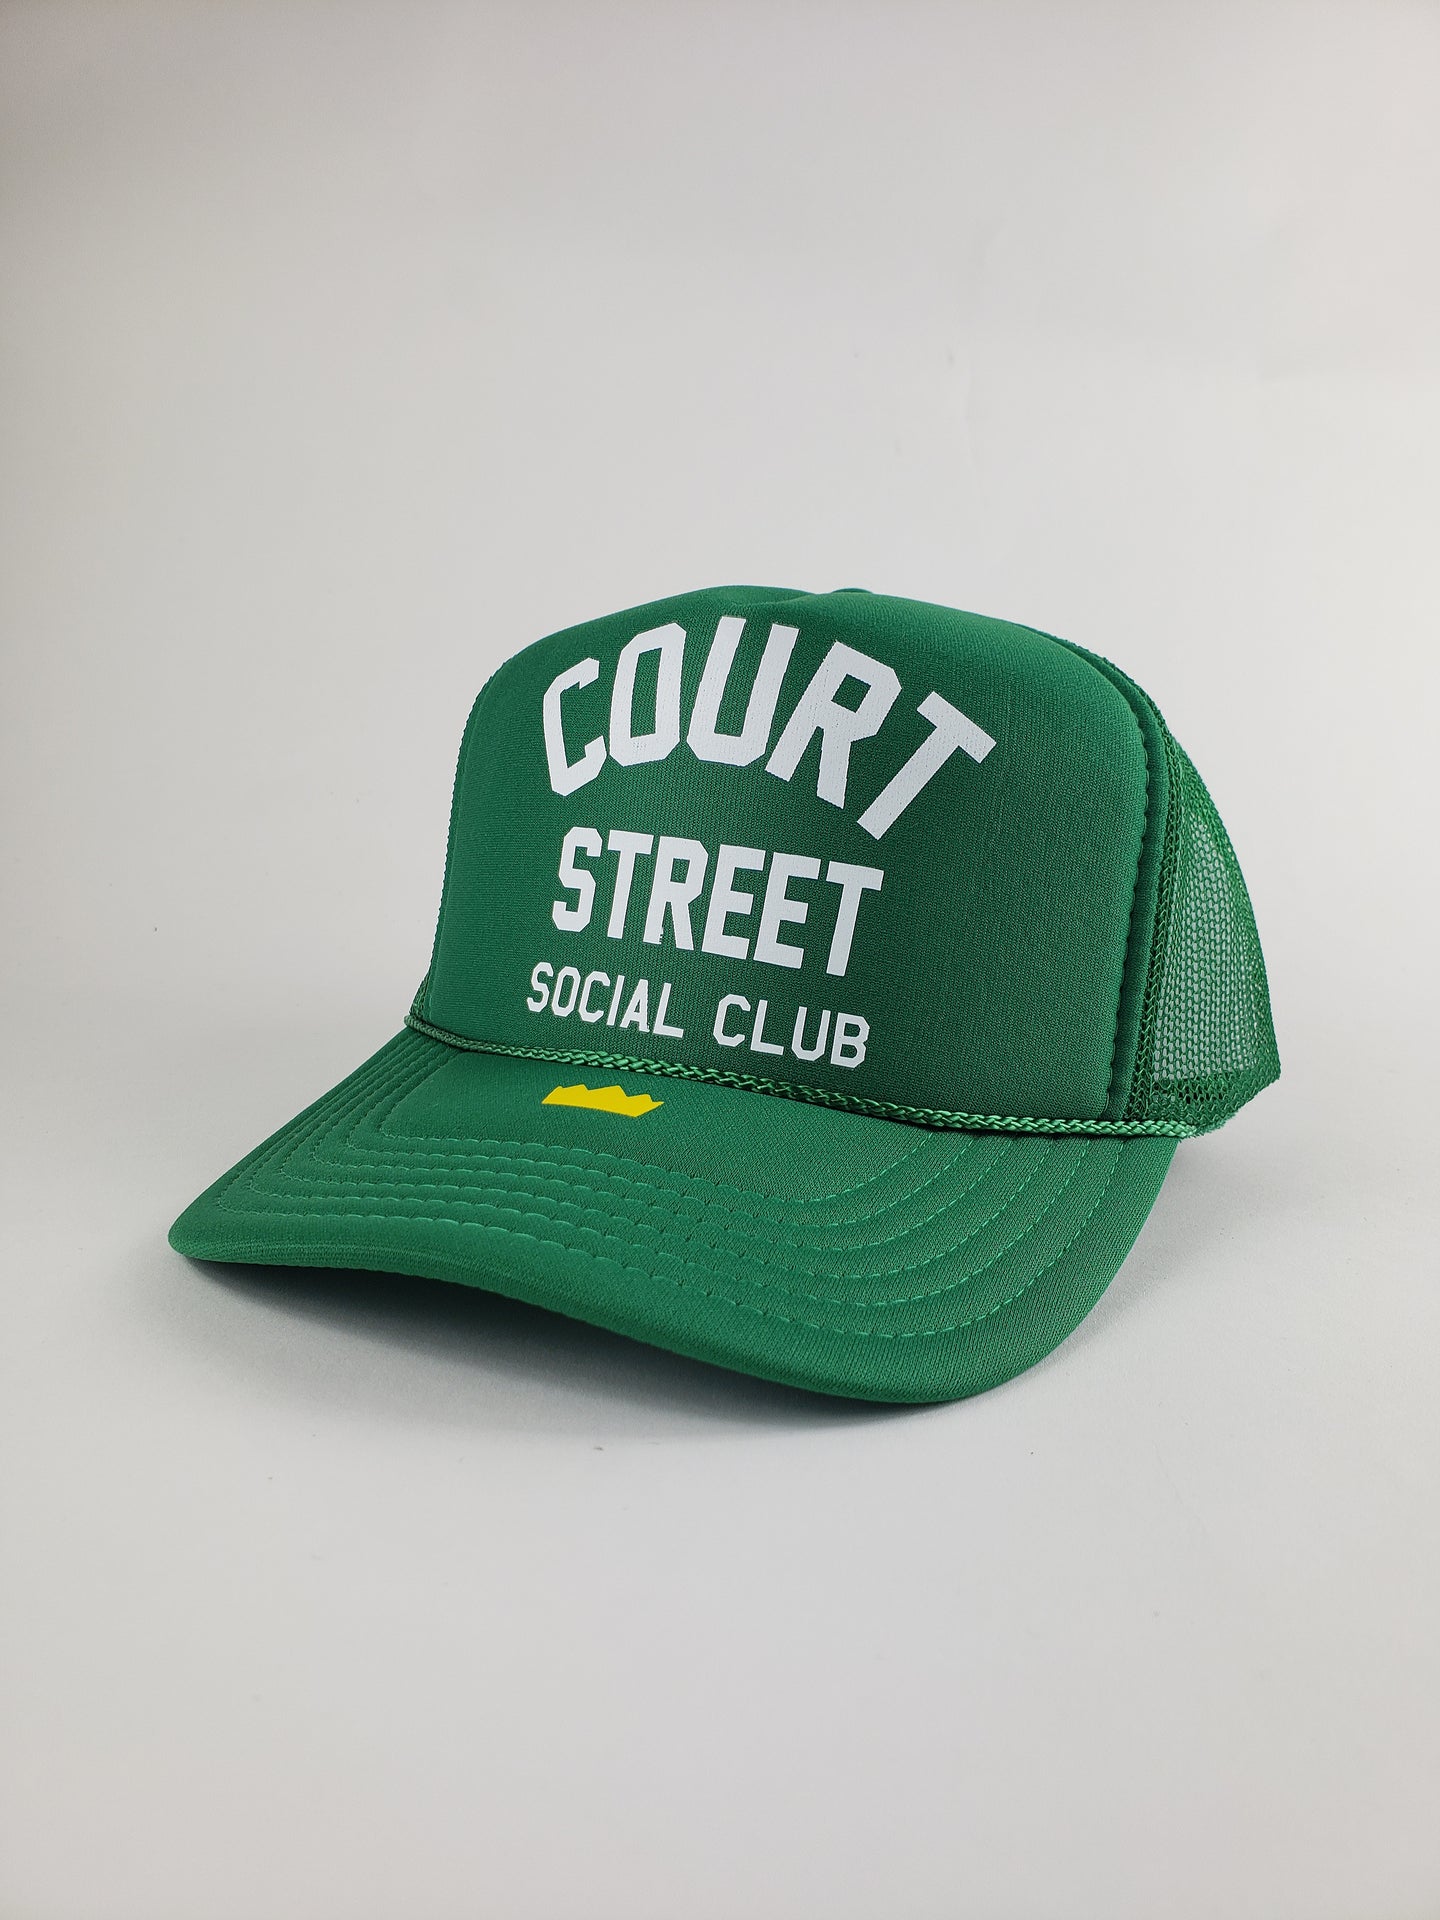 Court Street Social Club Trucker Hat (Green)